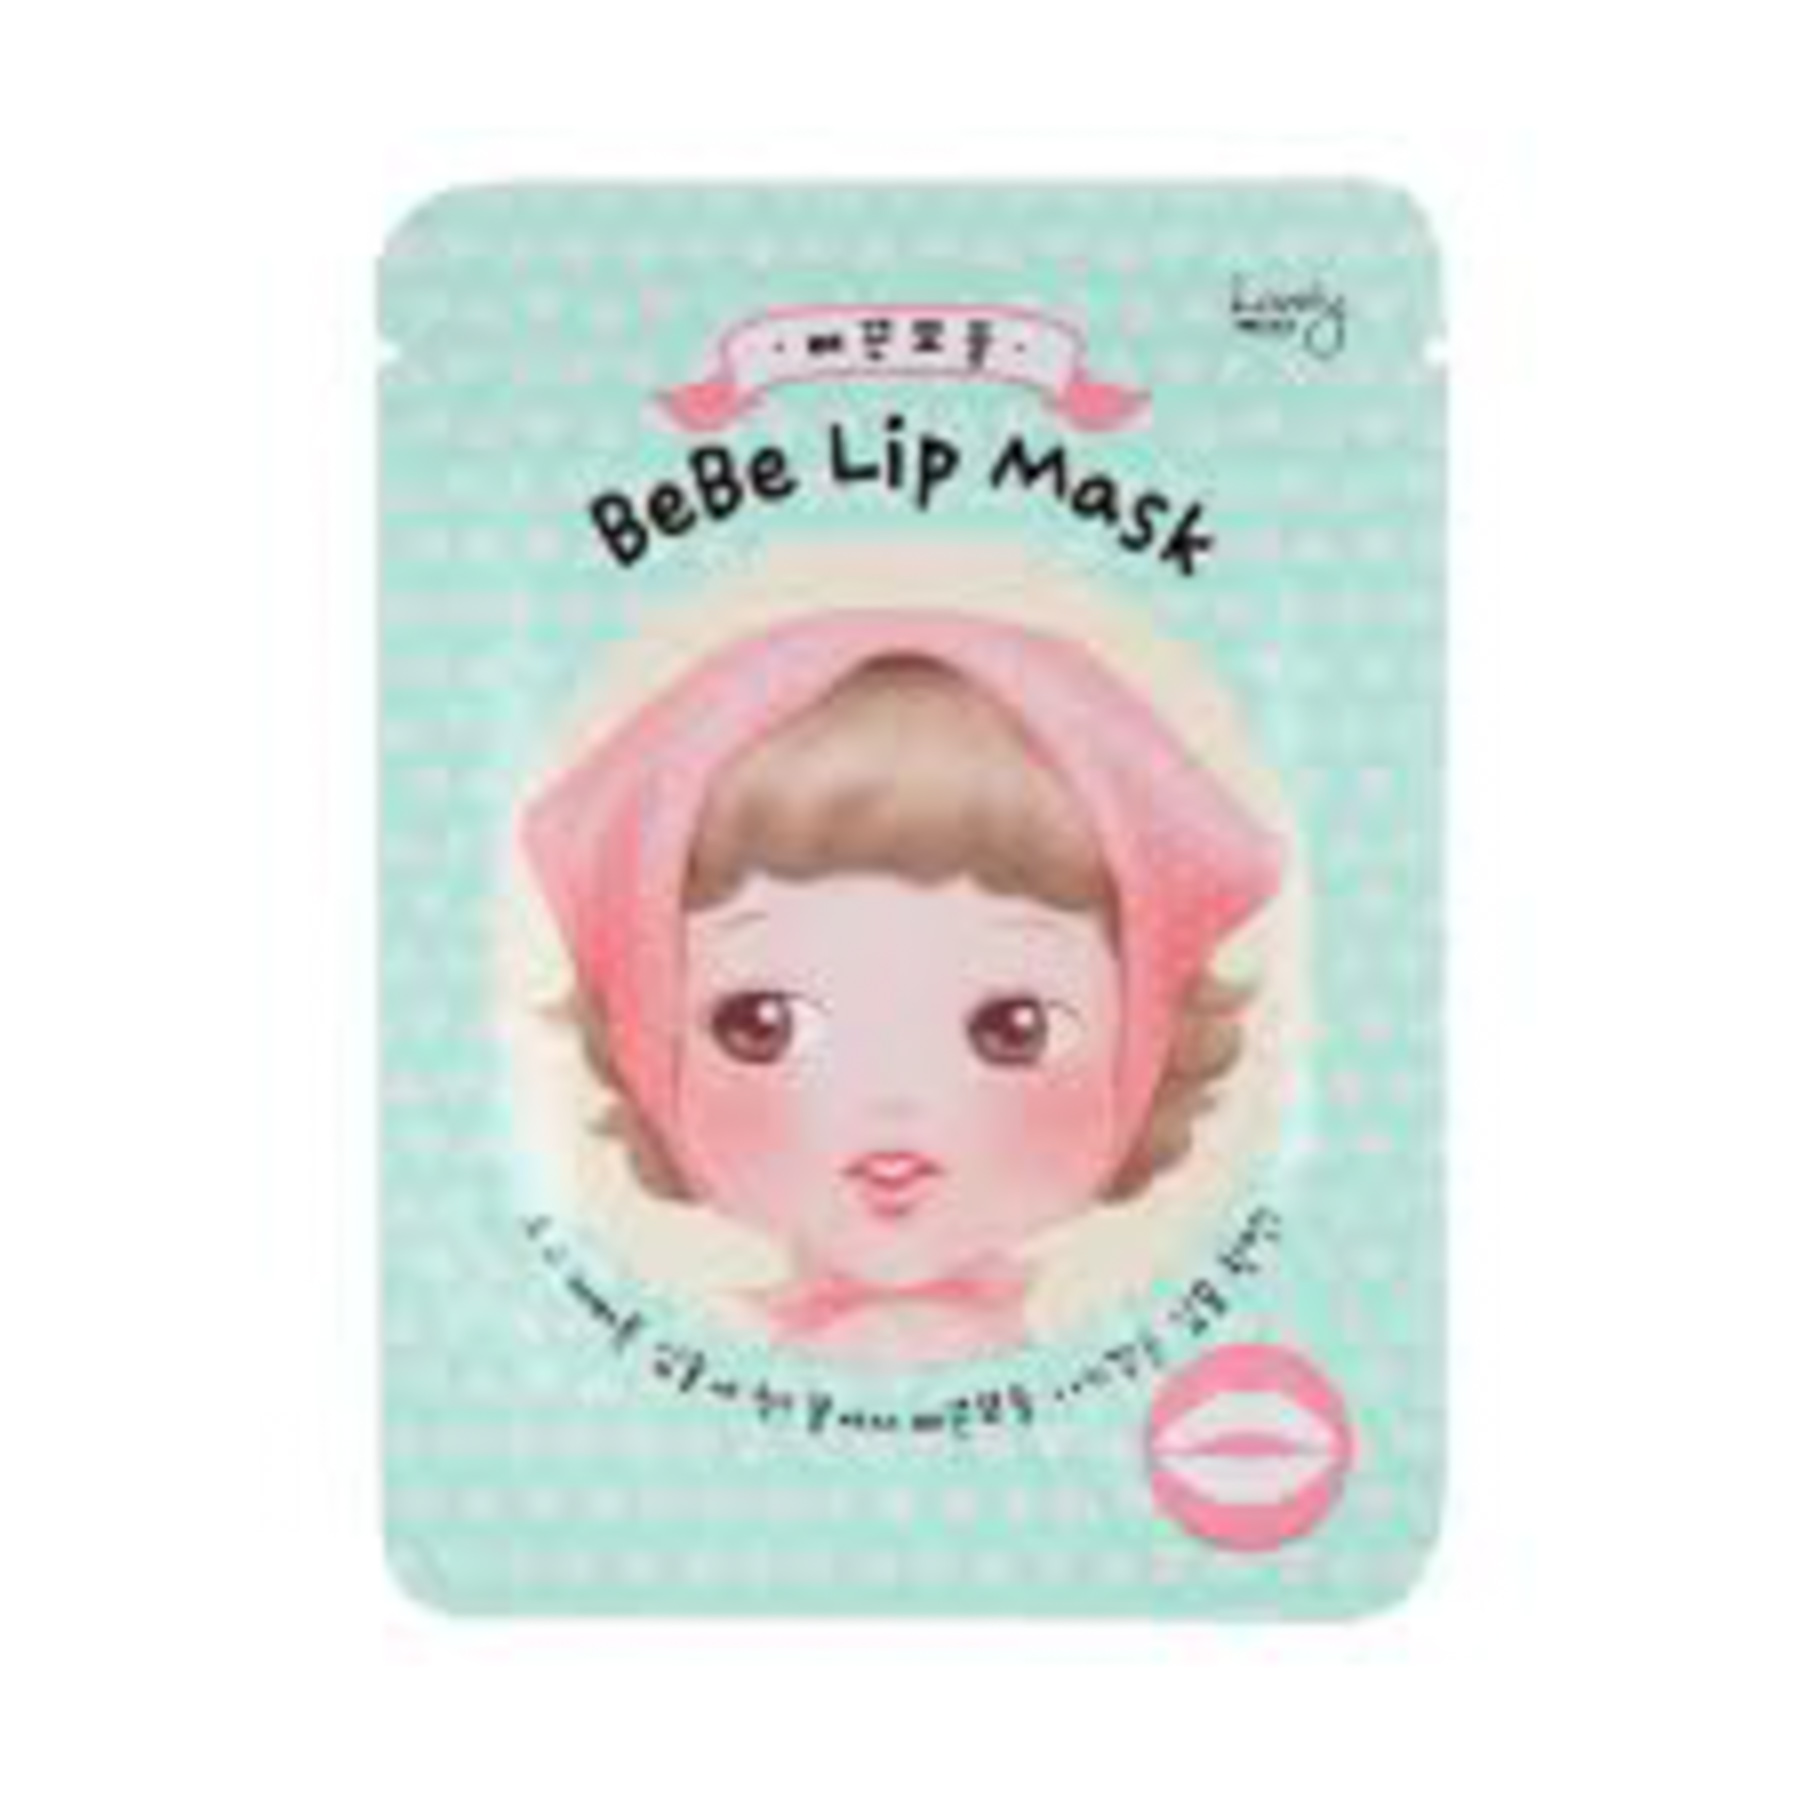 The Face Shop Lip Mask.jpg